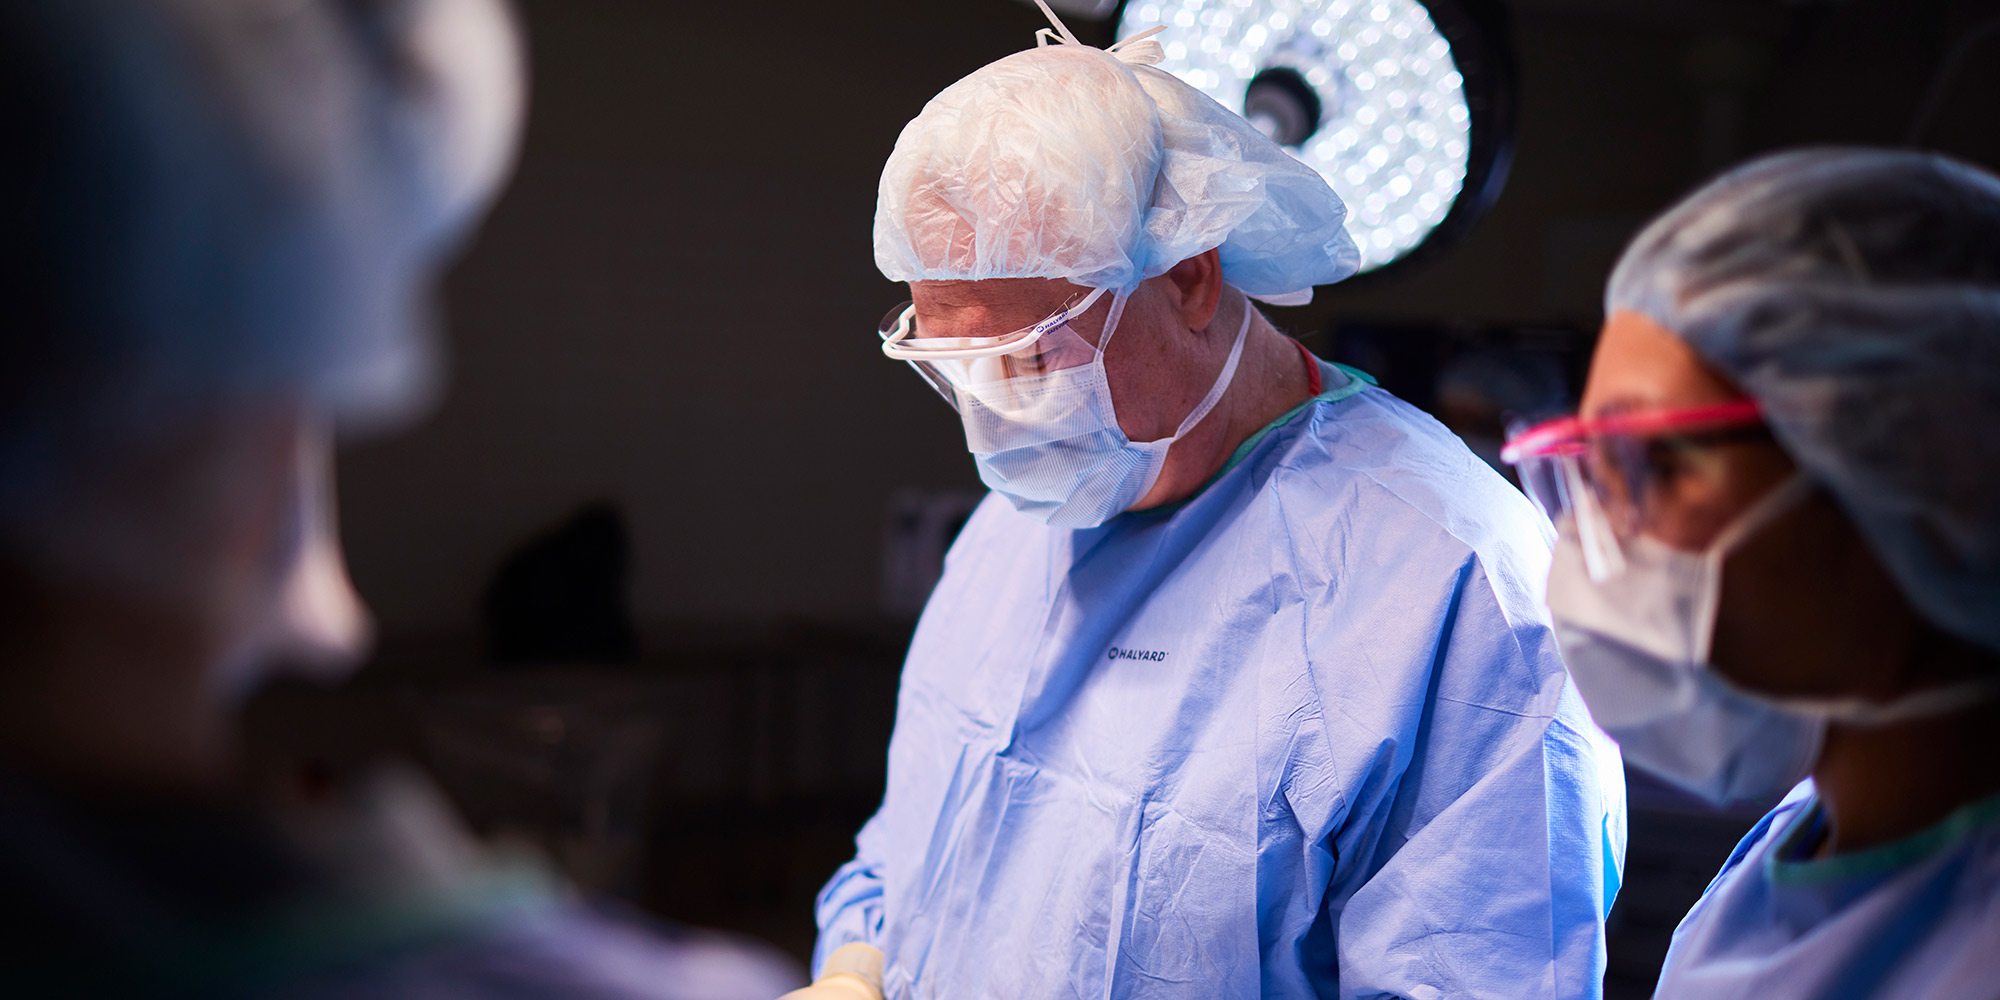 Orthopedic surgeon Dr. Brad Wyrsch at Mercy hospital in Springfield, Missouri